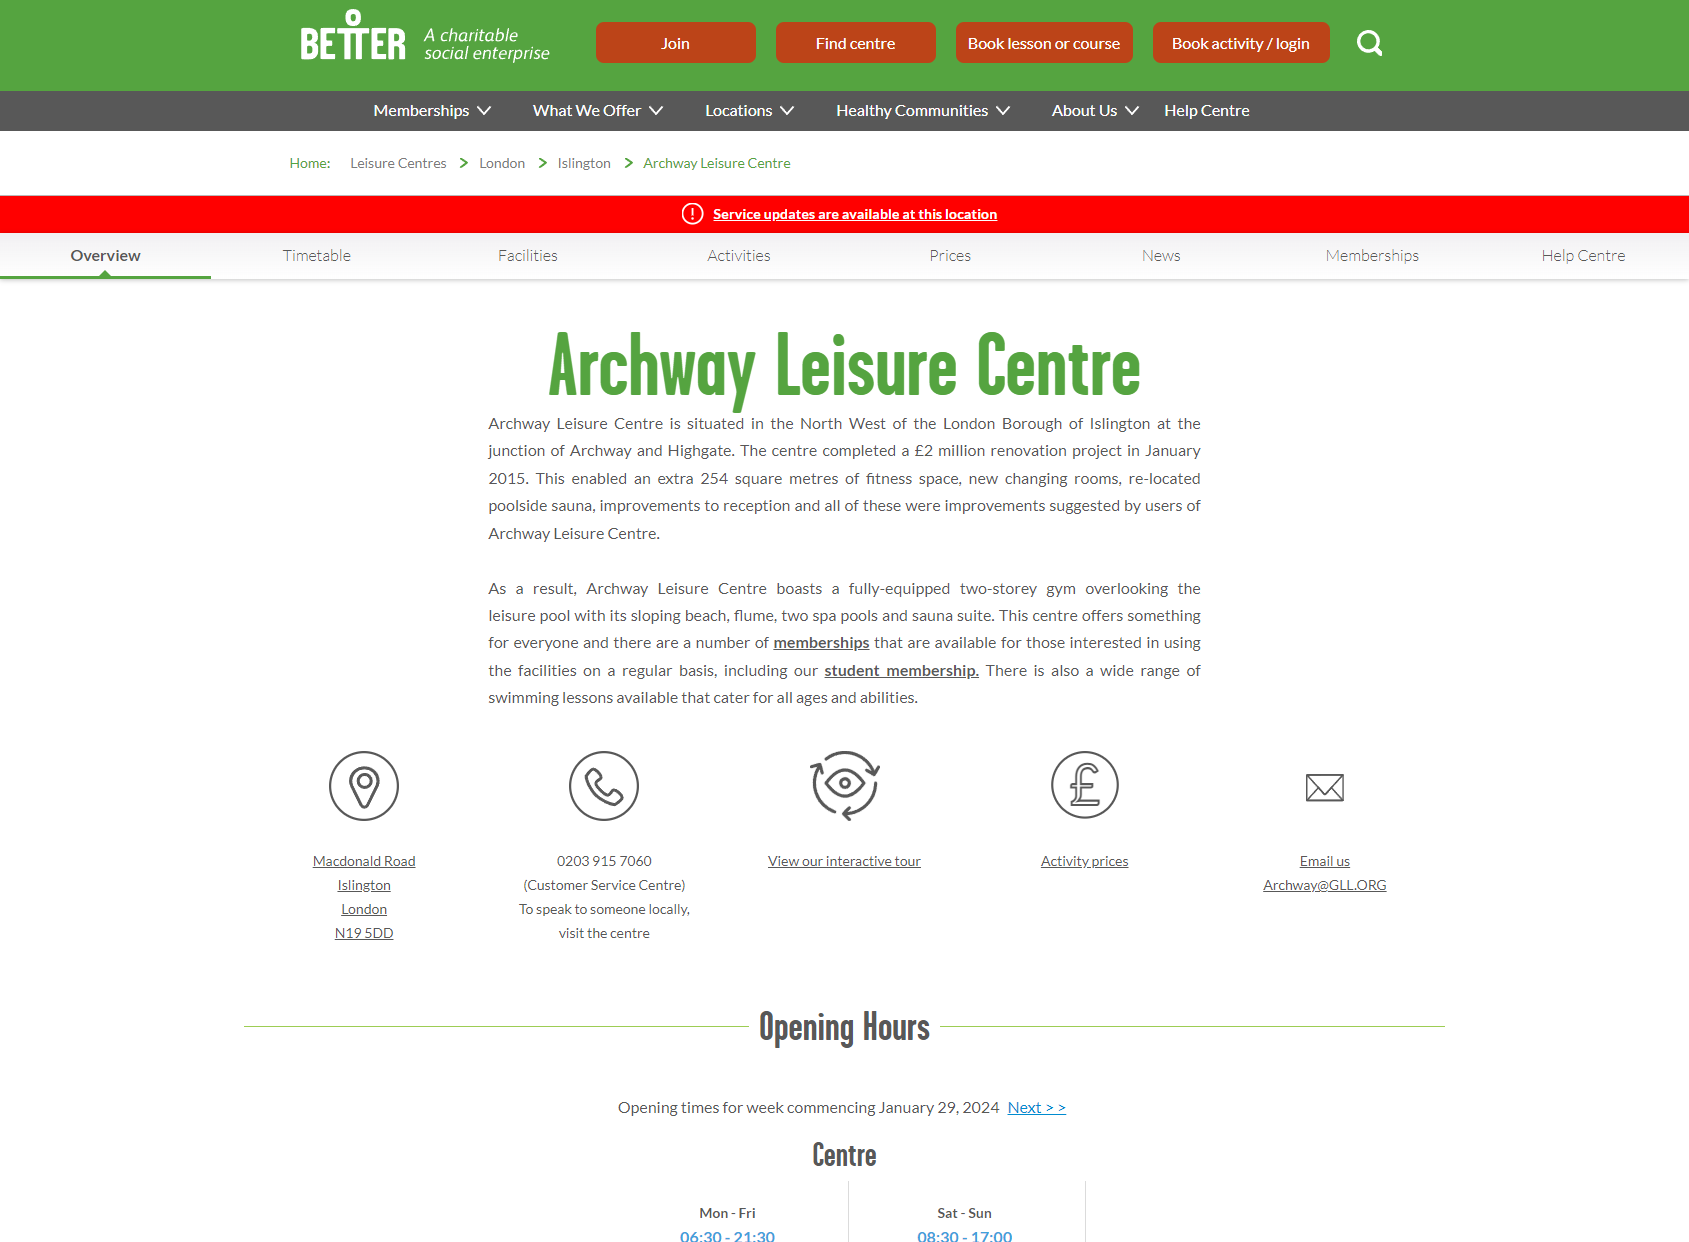 Archway Leisure Centre